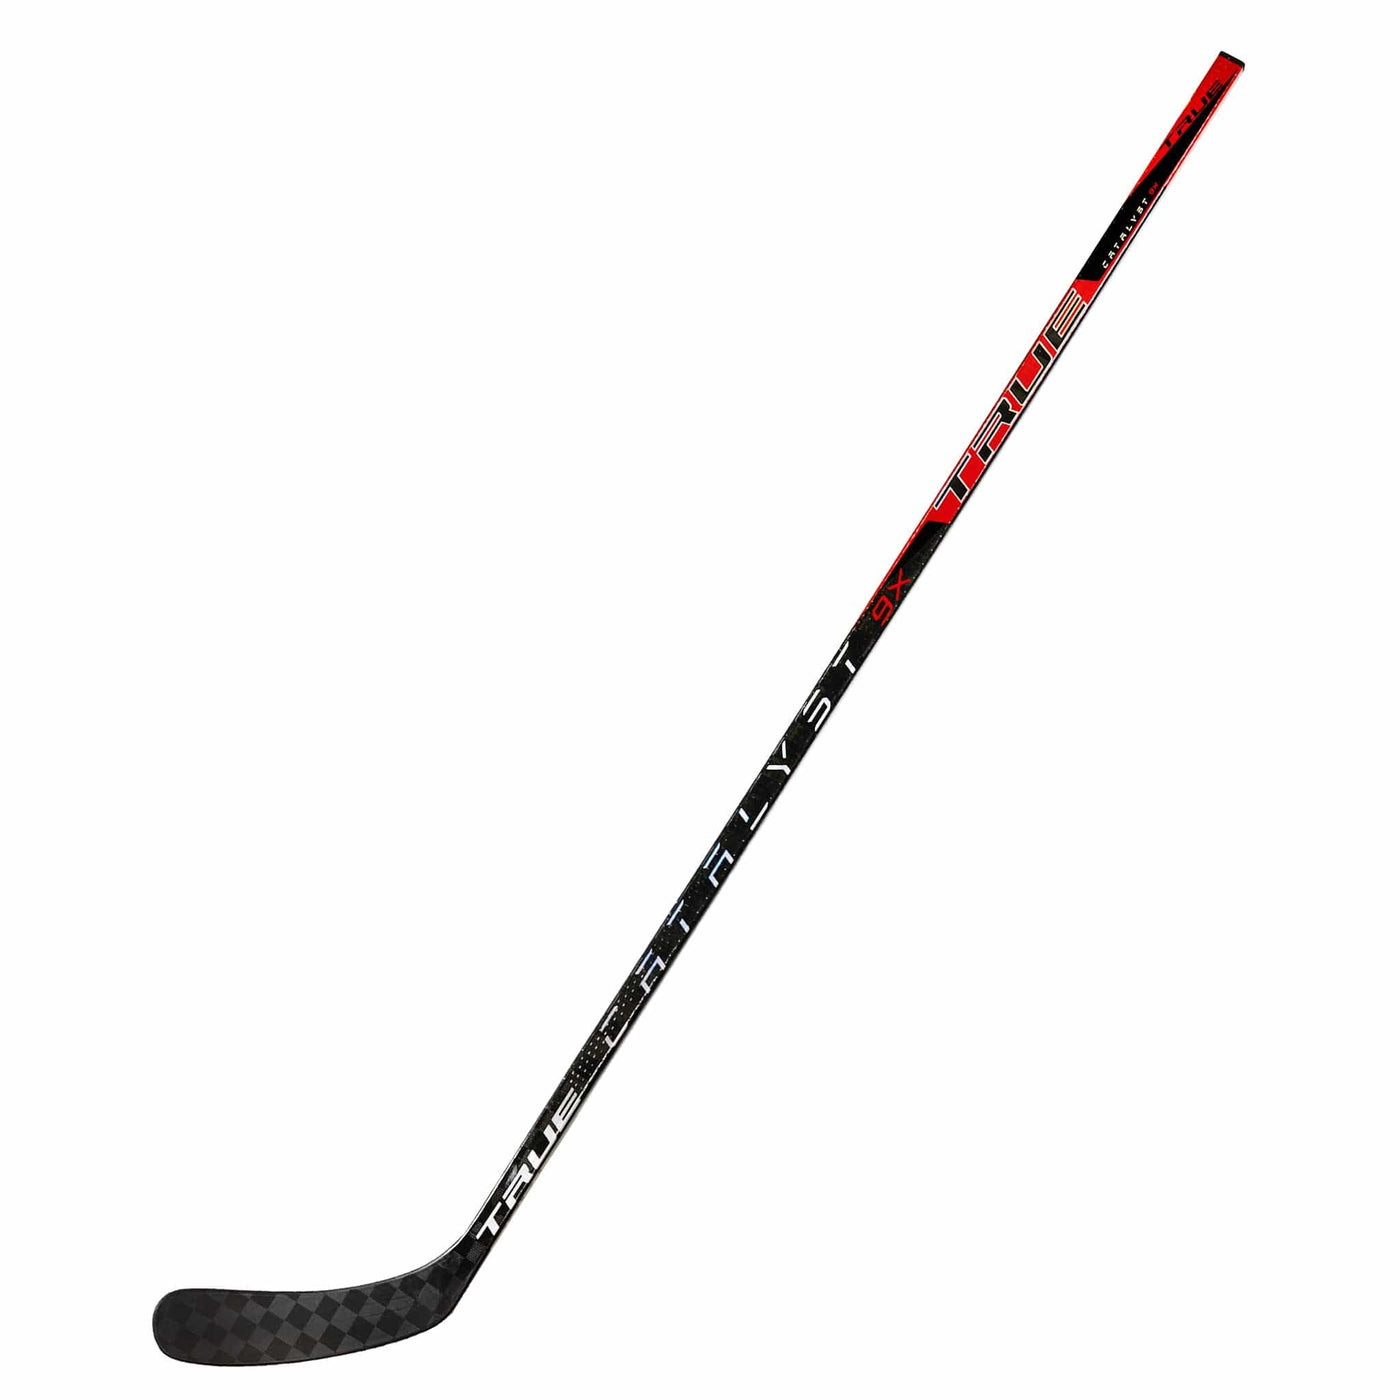 TRUE Catalyst 9X Pro Stock Senior Hockey Stick - Brandon Pirri - The Hockey Shop Source For Sports